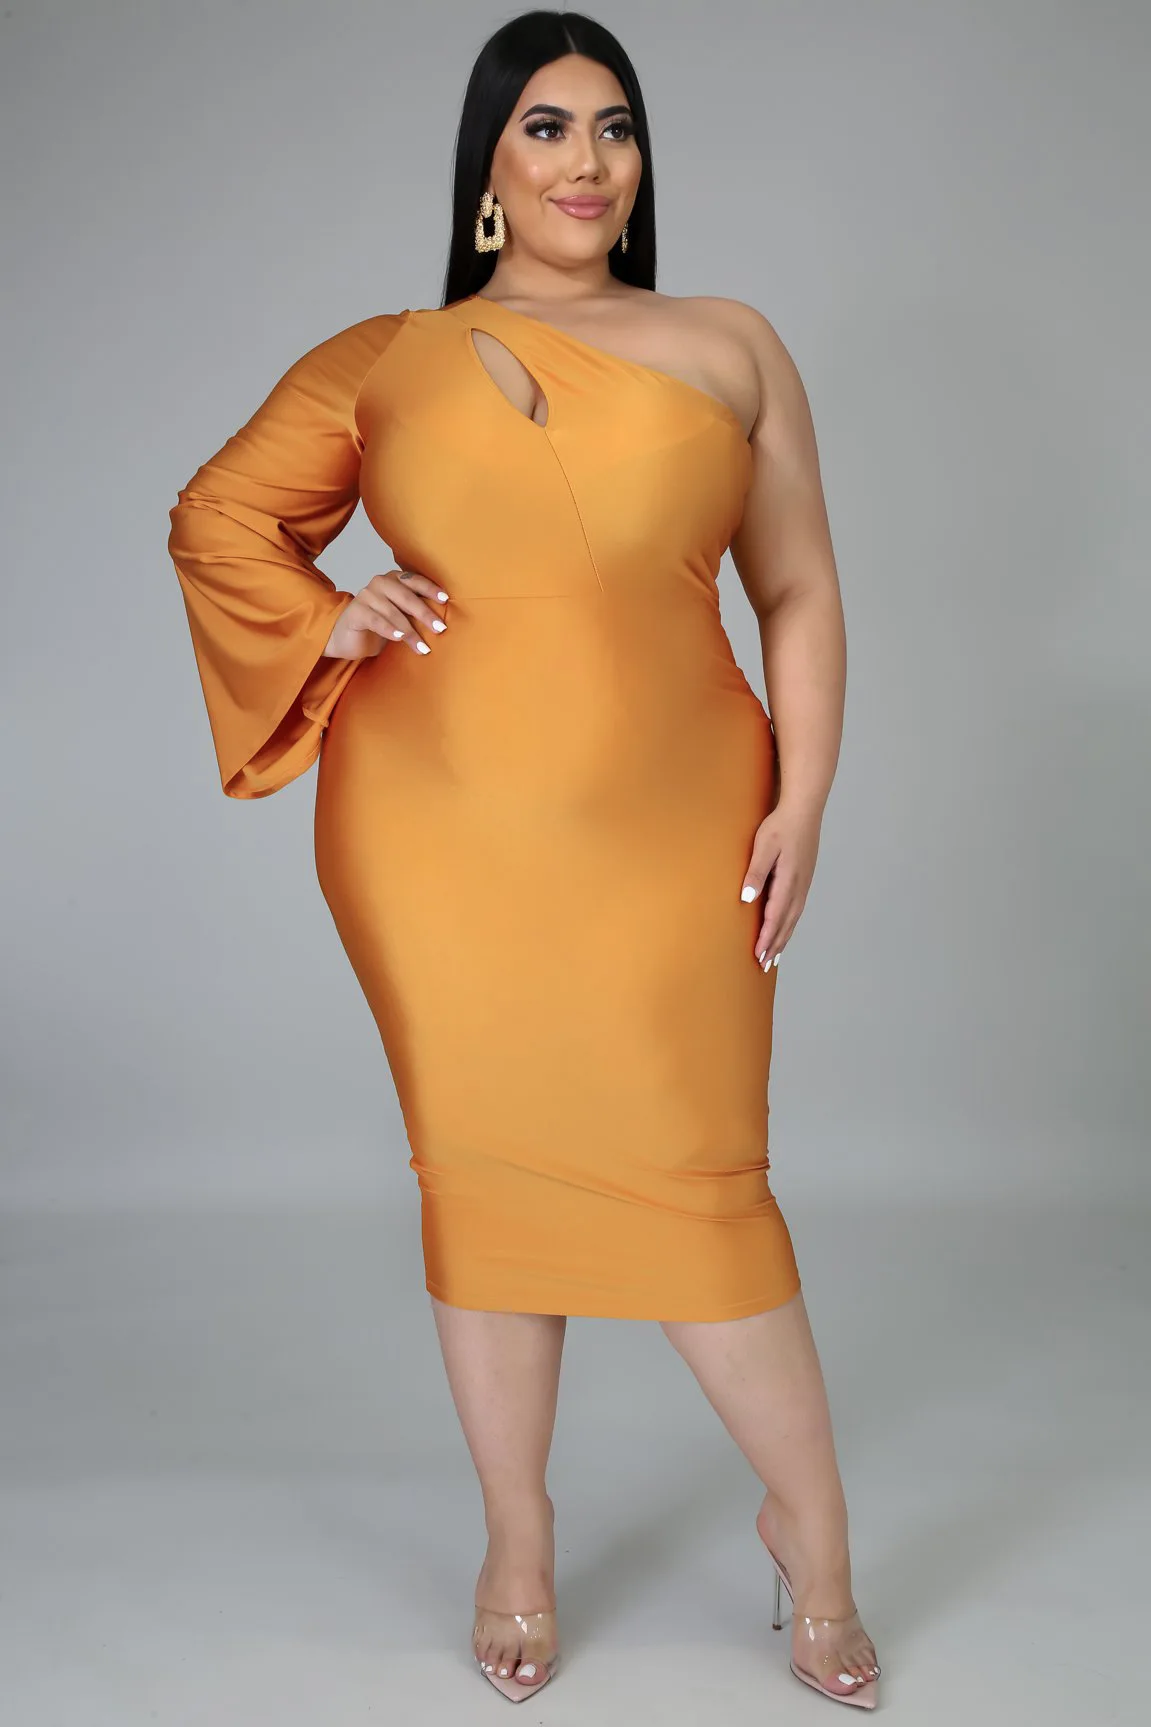 Women's Casual Bodycon Dress Half Sleeve Pencil Midi Party Clubwear Plus Size